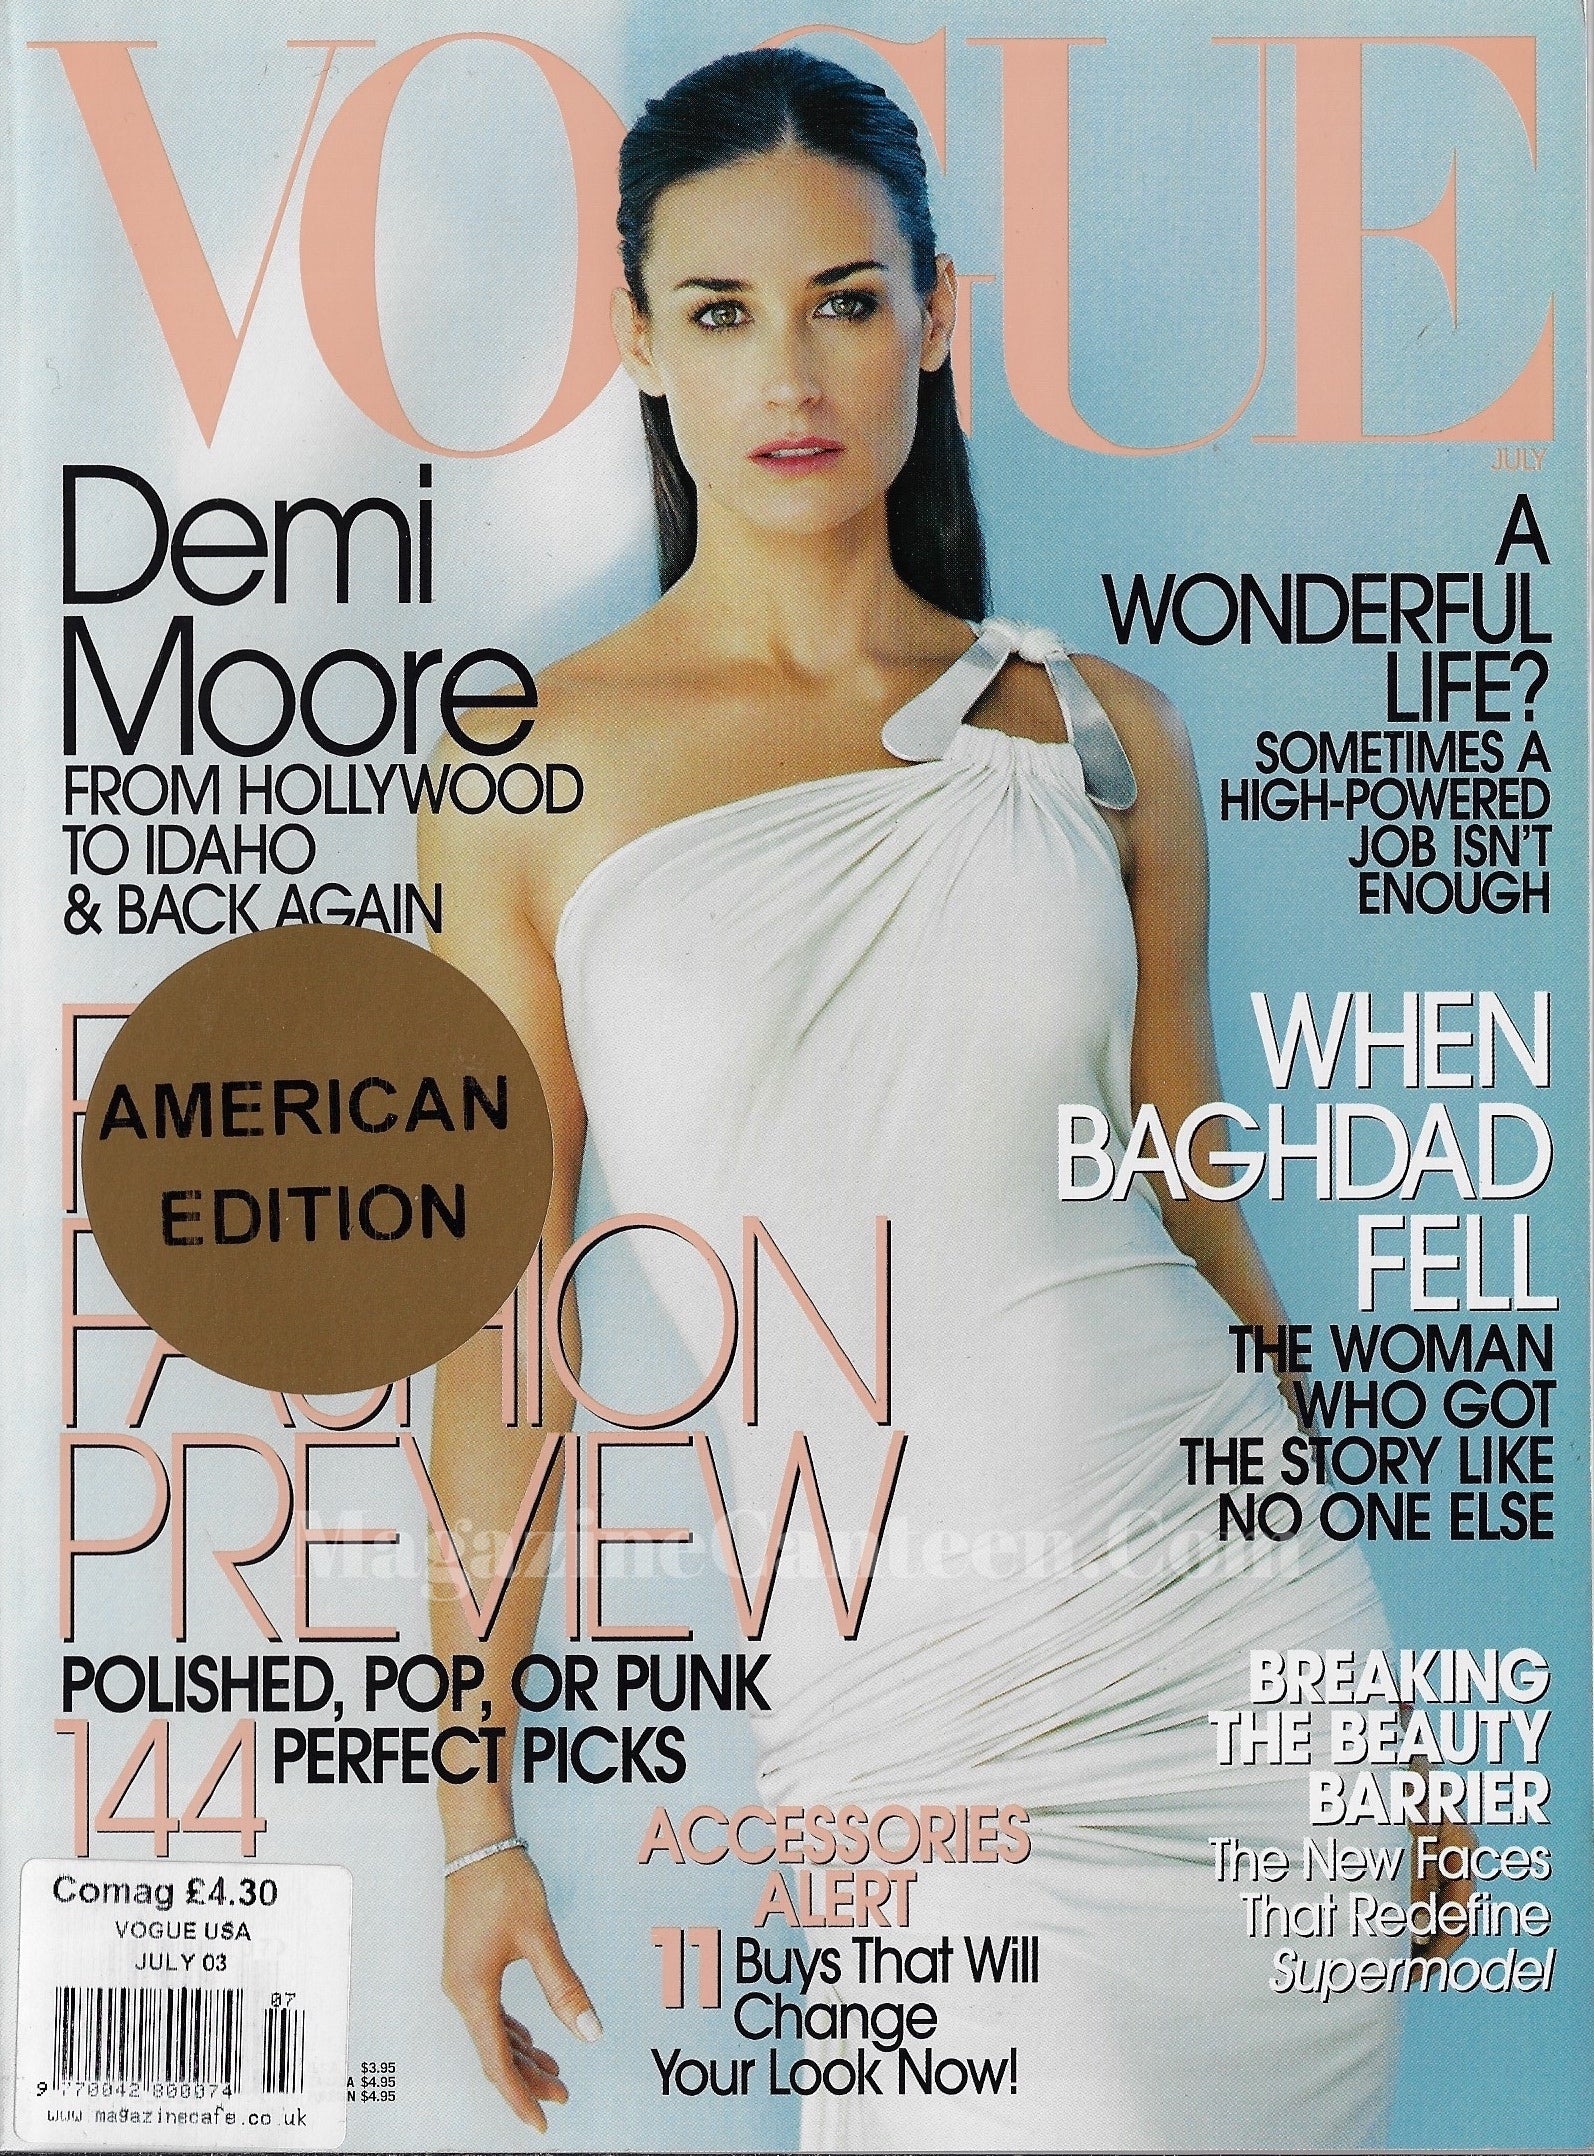 Vogue USA Magazine July 2003 - Demi Moore